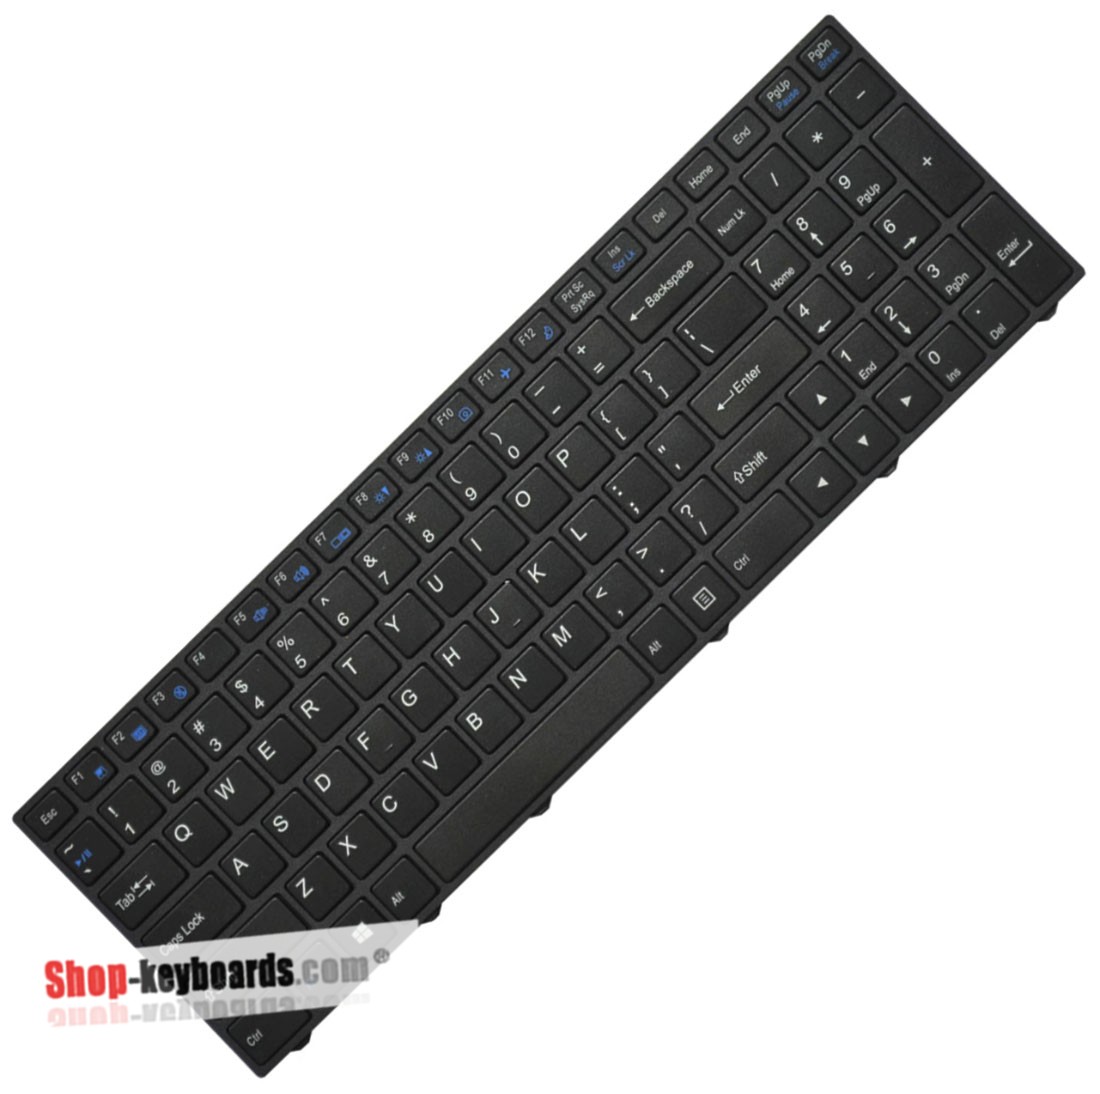 Wortmann Terra Mobile 1513S Keyboard replacement